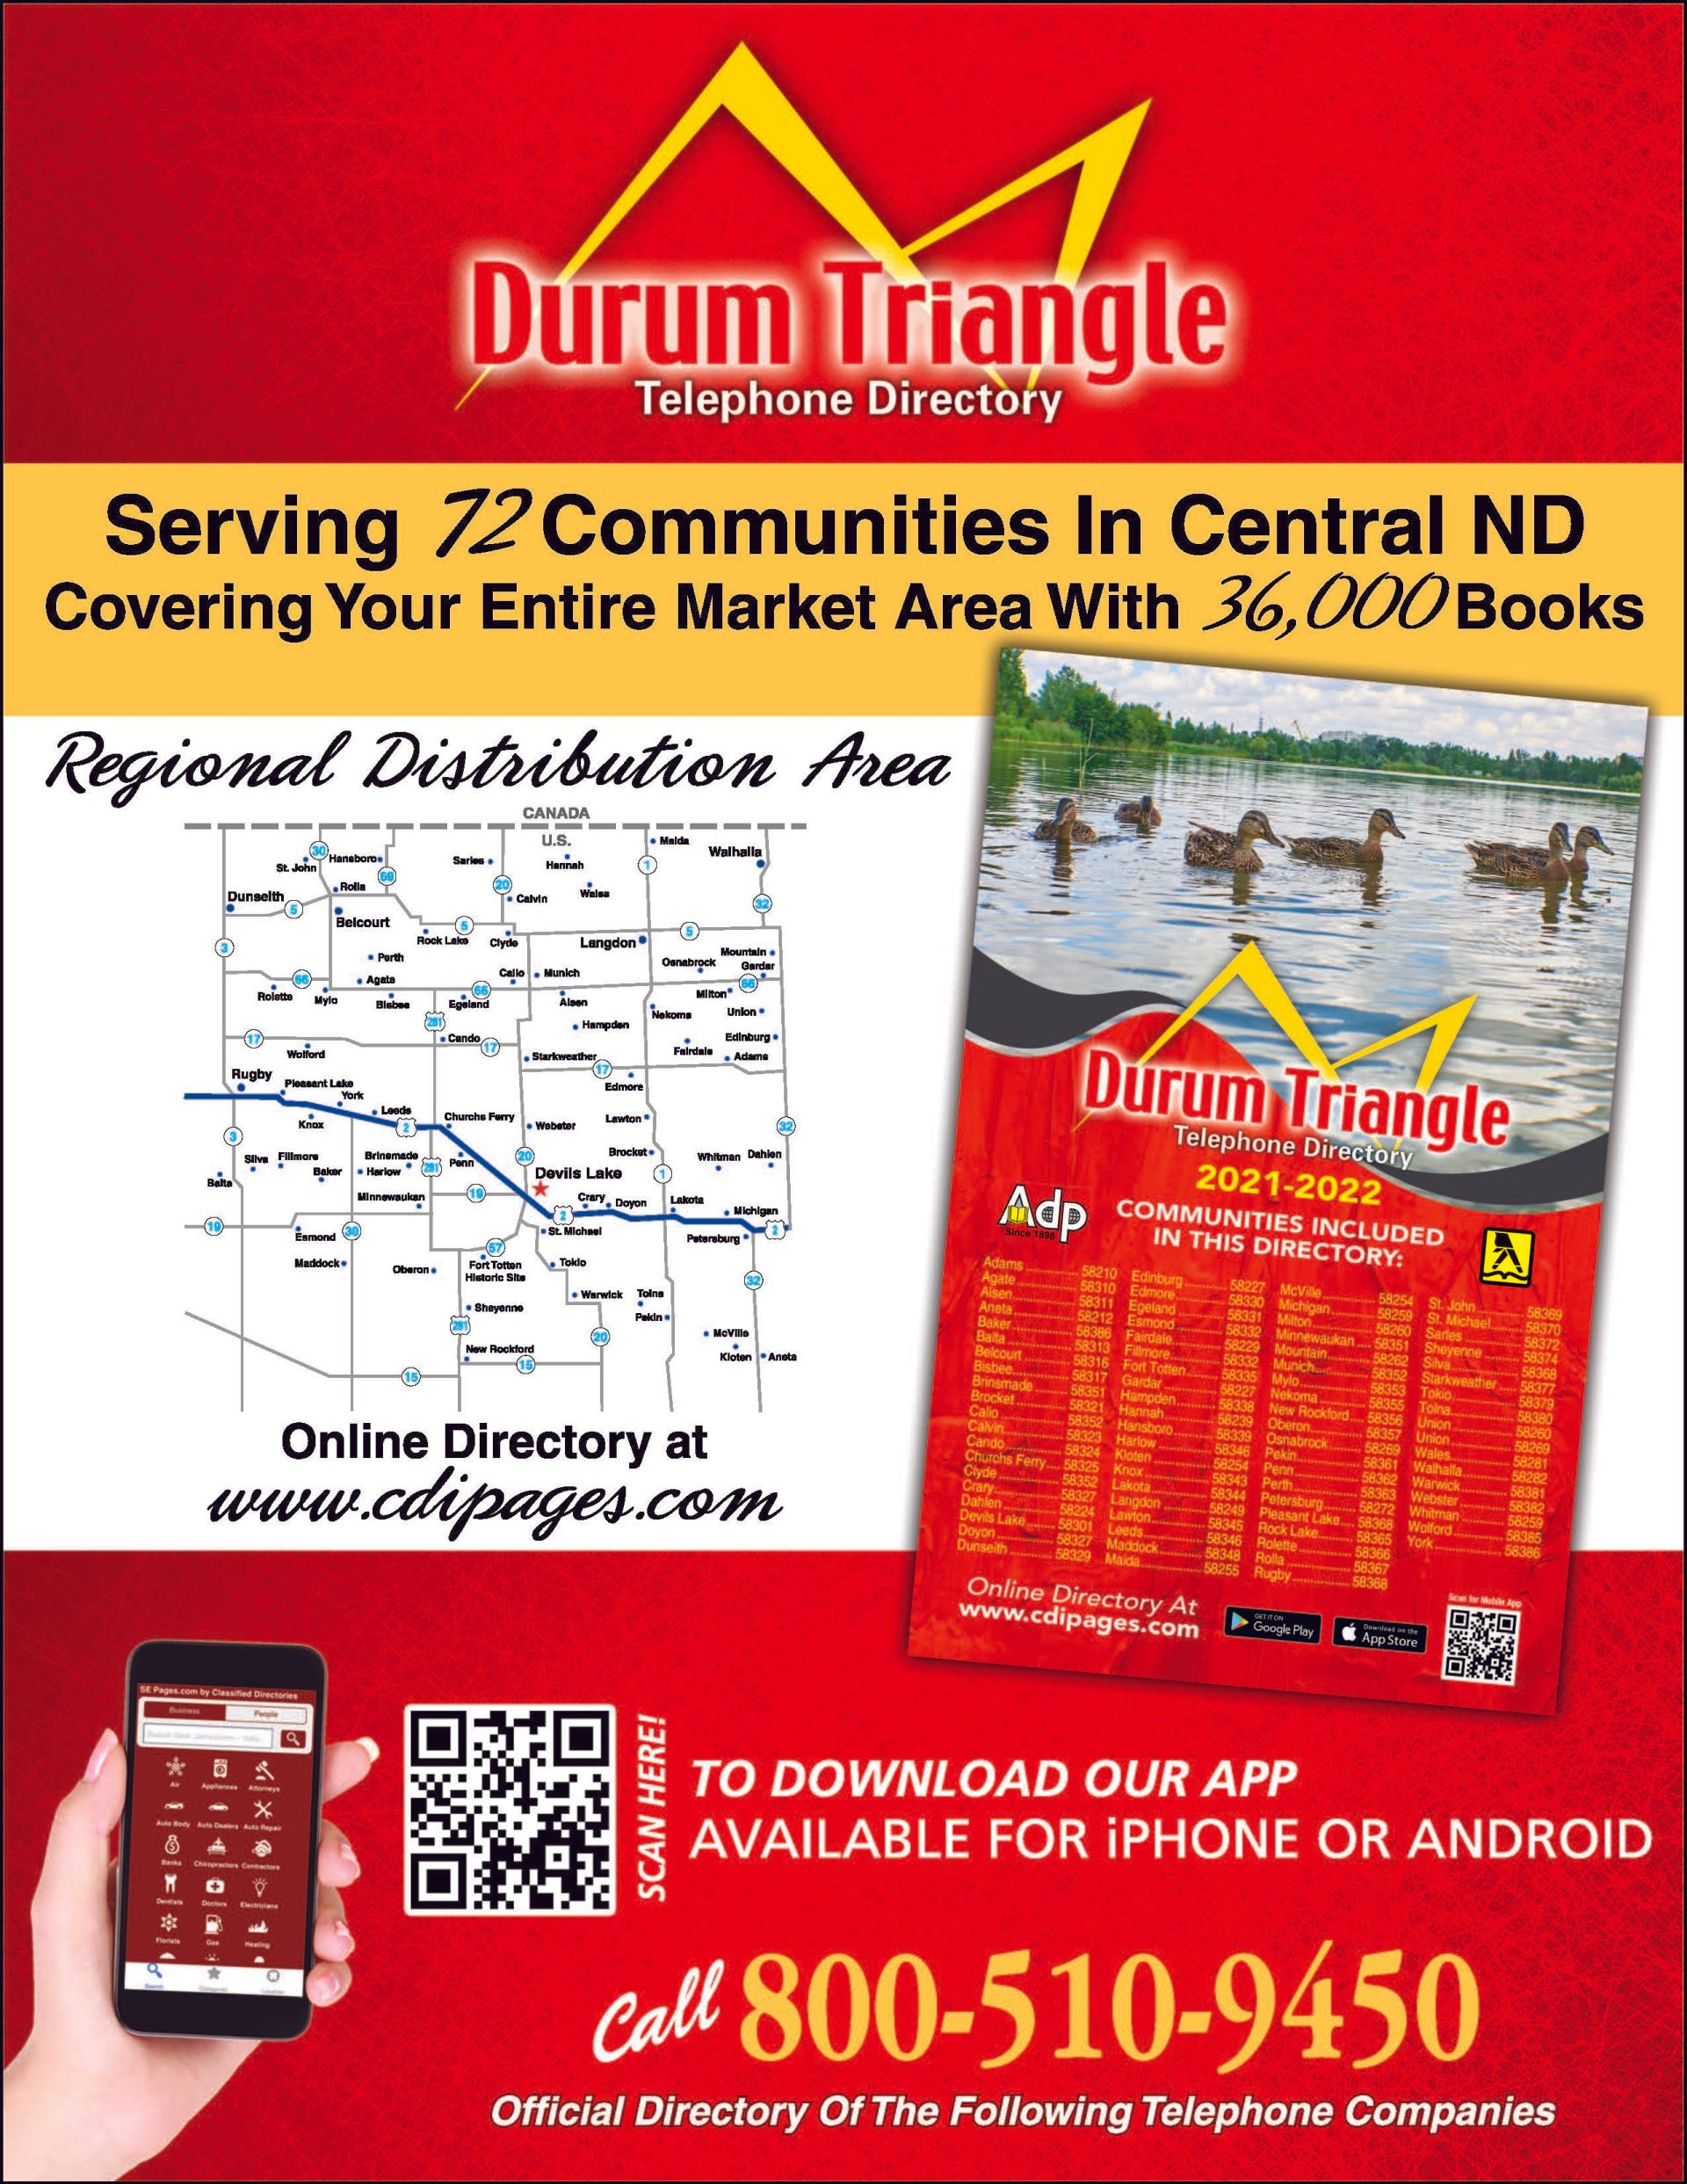 Durum Triangle Telephone Directory